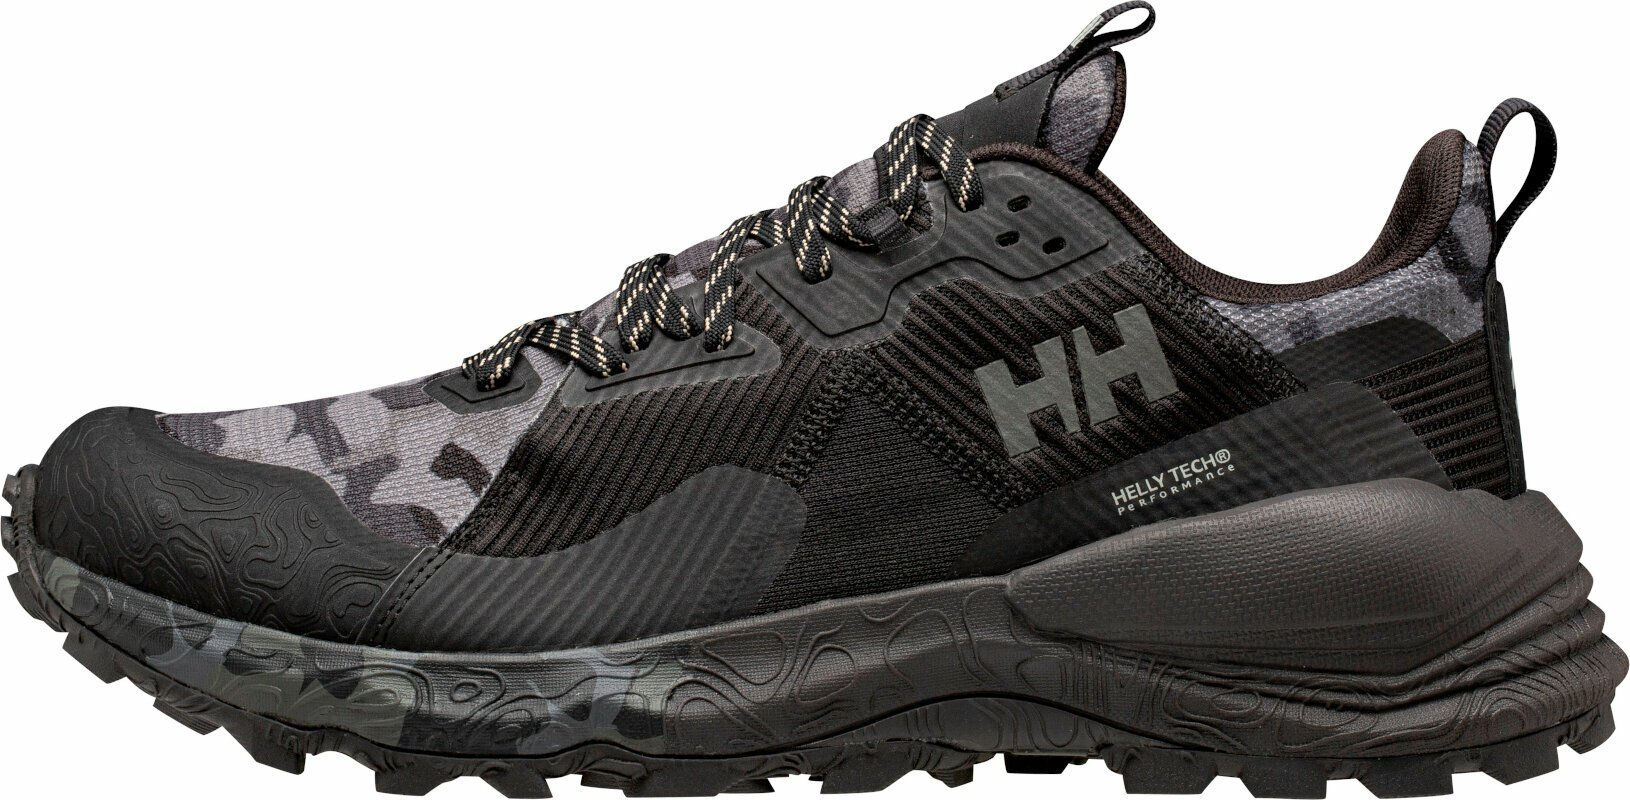 Chaussures de trail running Helly Hansen Men's Hawk Stapro Trail Running High Top Shoes  Black/Phantom Ebony 43 Chaussures de trail running